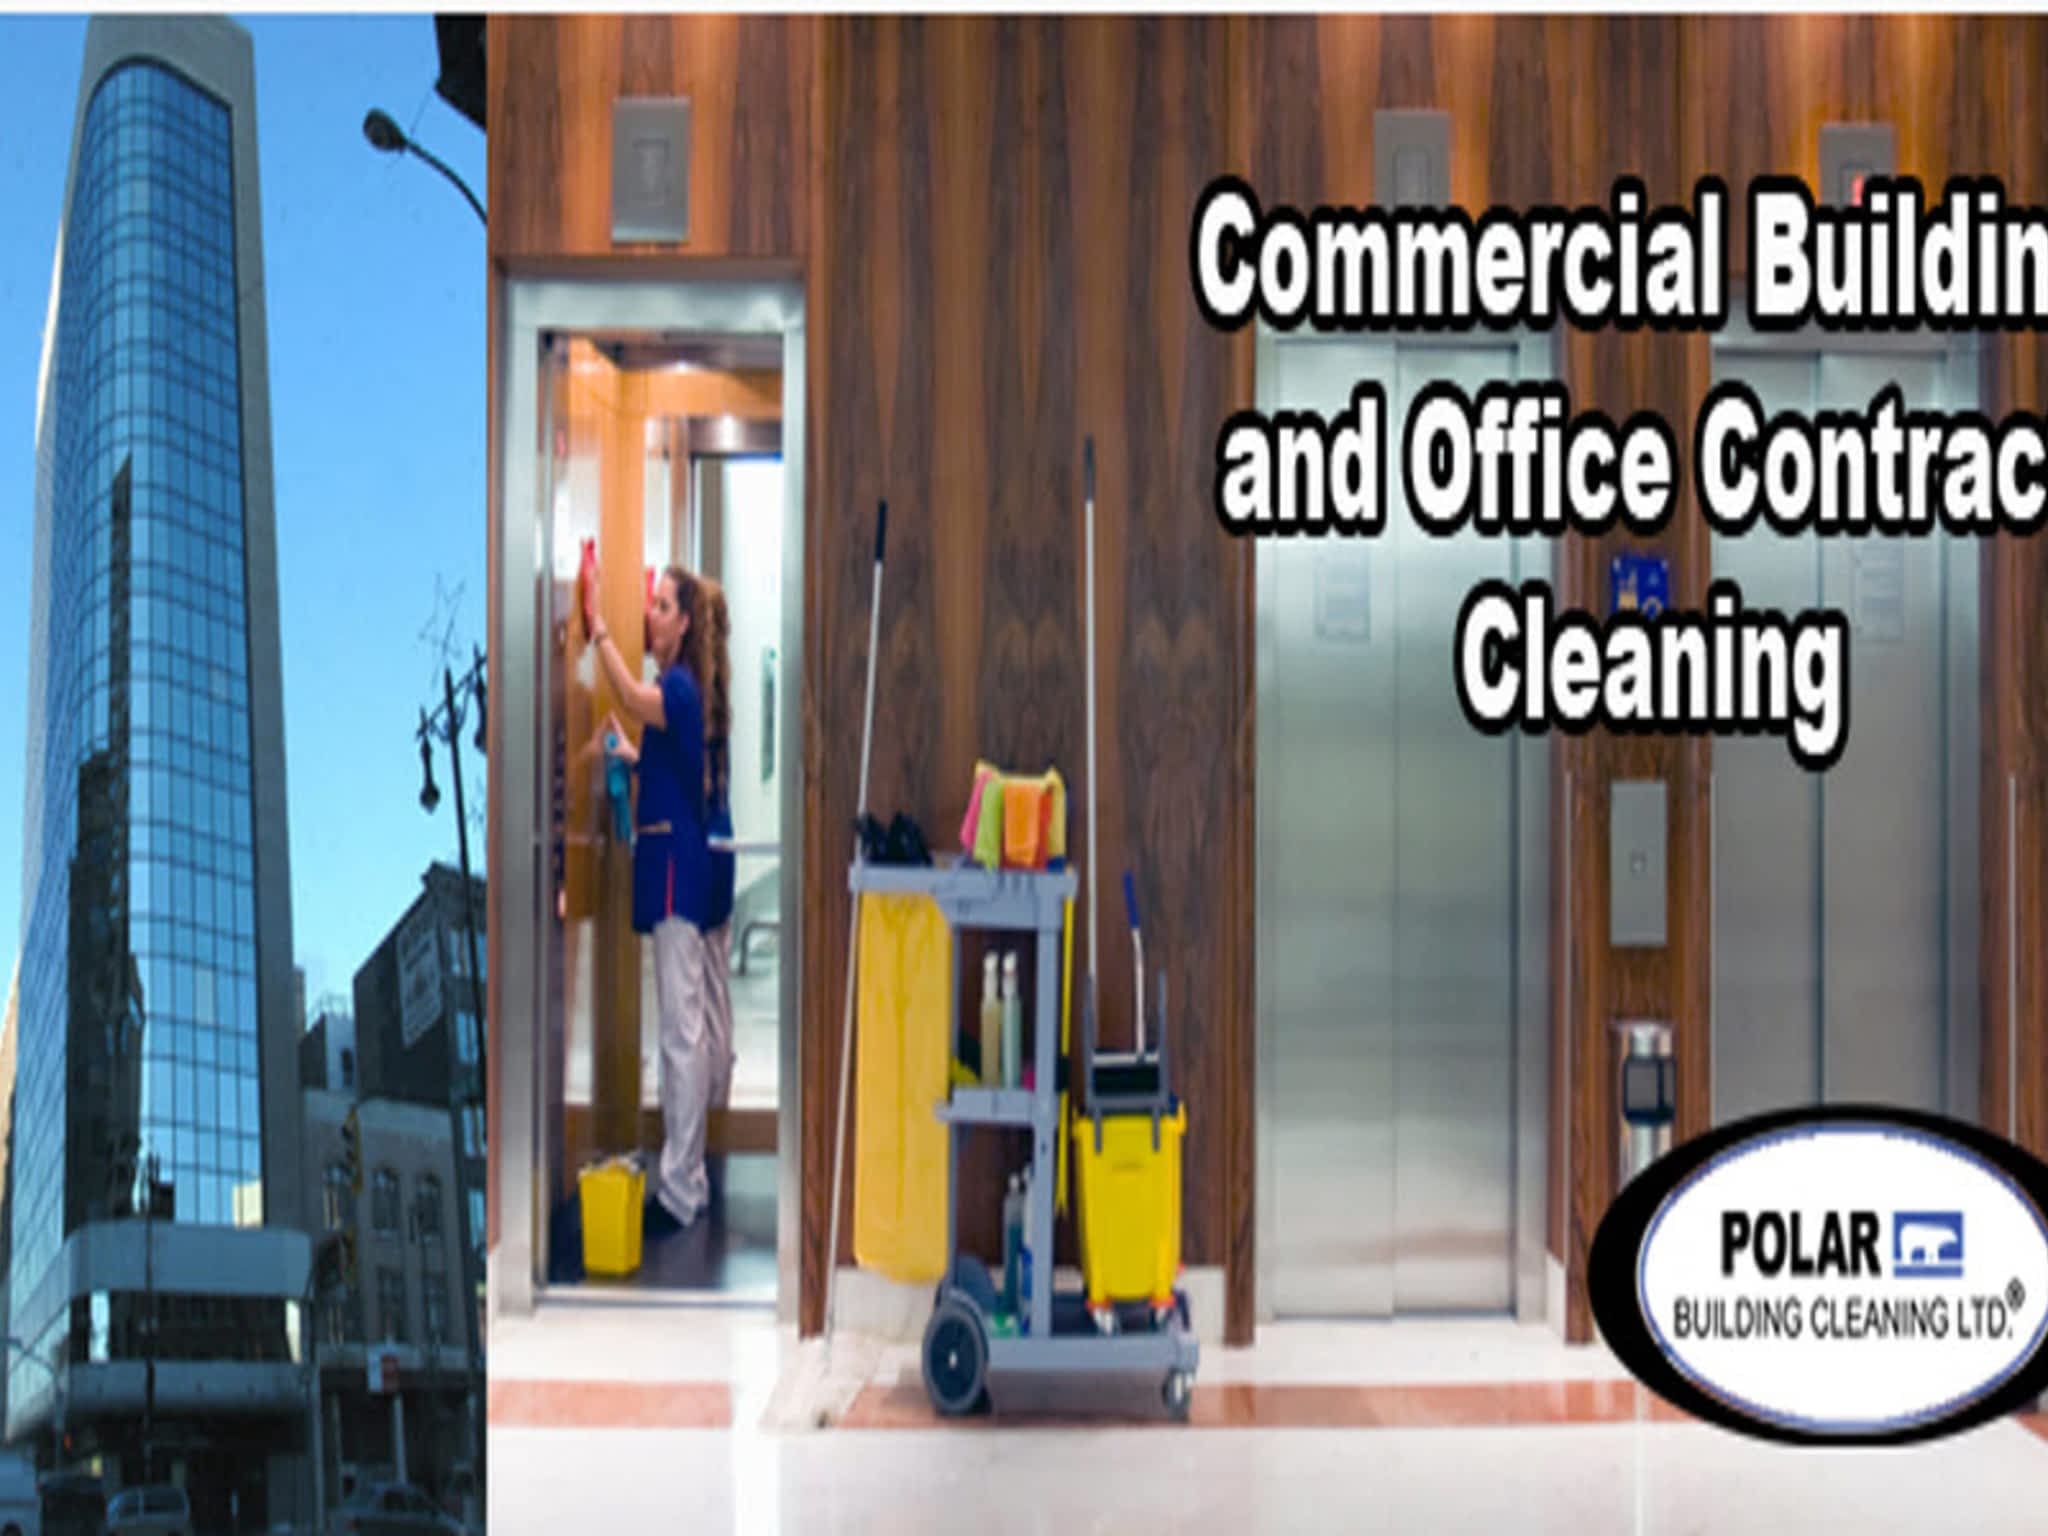 photo Polar Building Cleaning (2001) Ltd